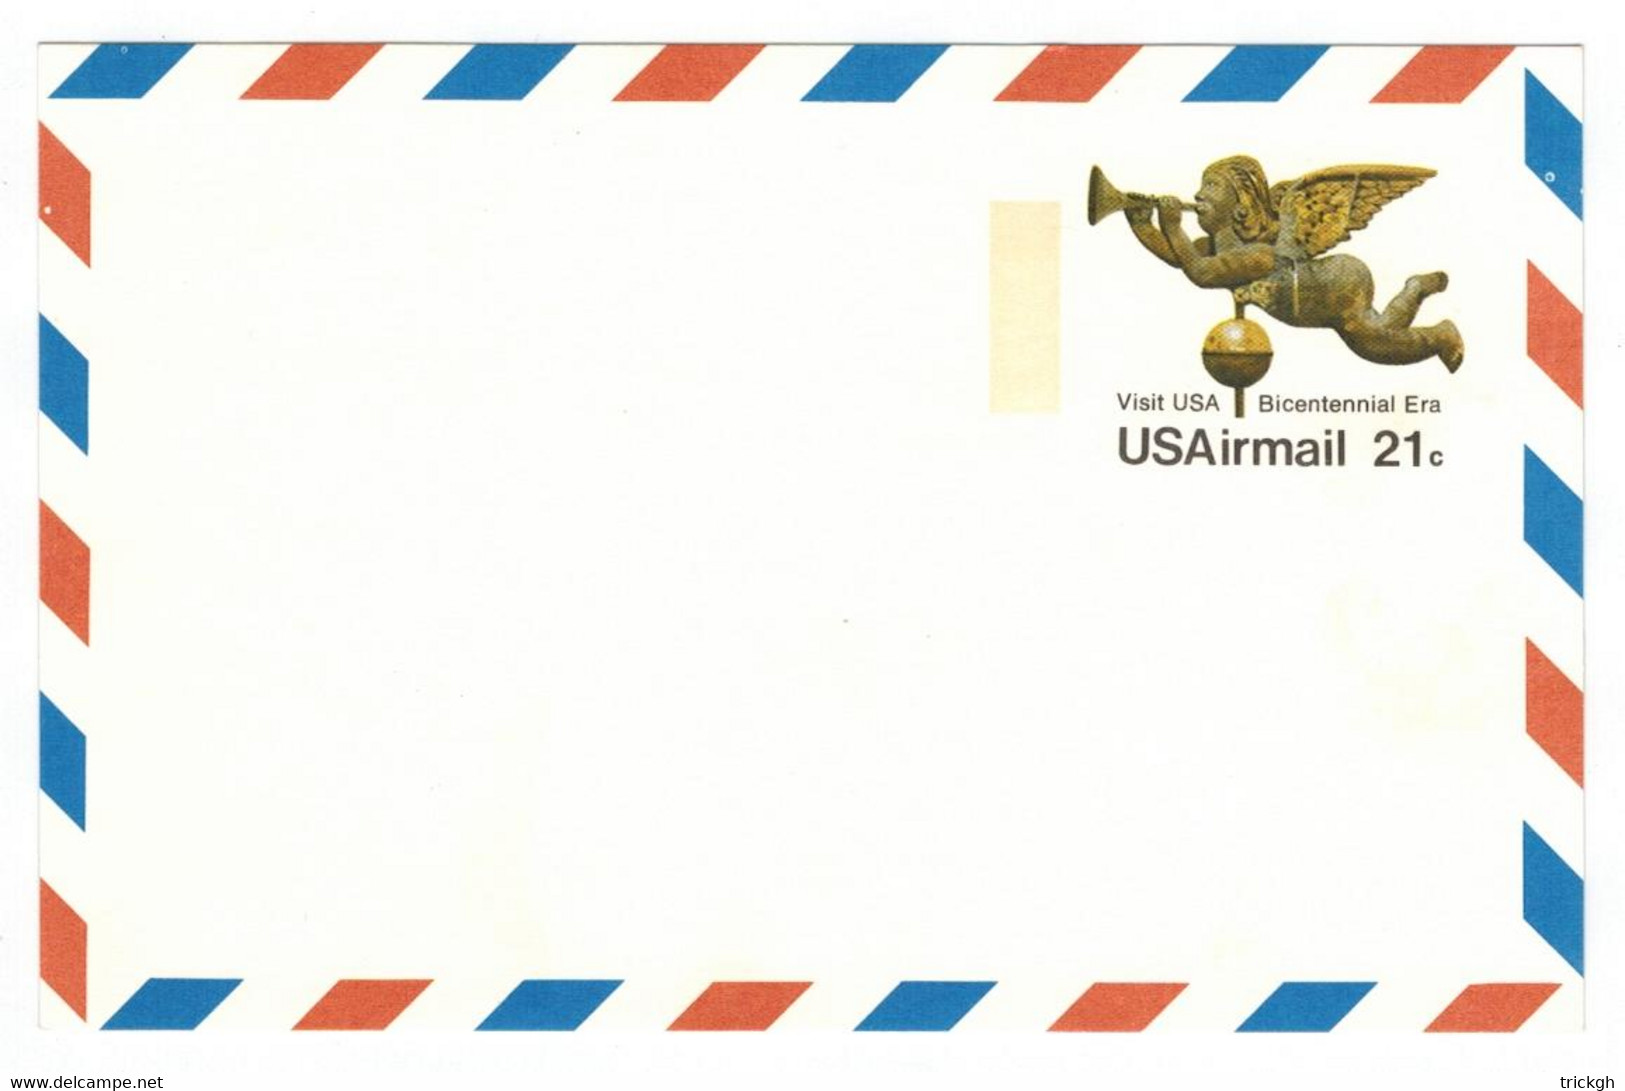 UXC16 Visit USA - 1961-80